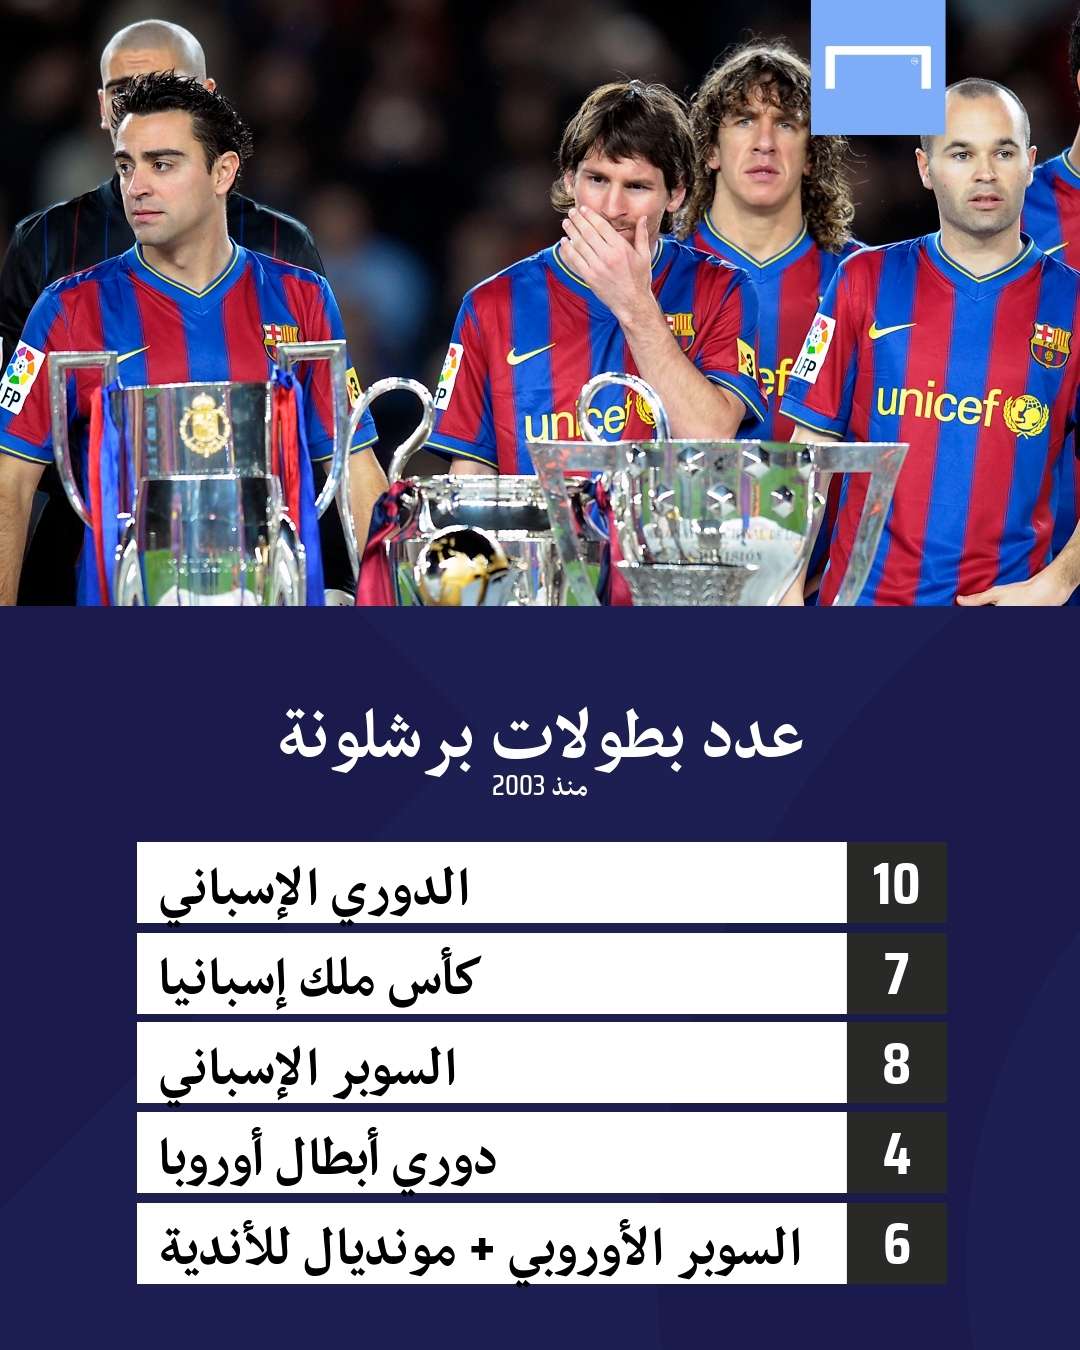 Barcelona trophies since 2003